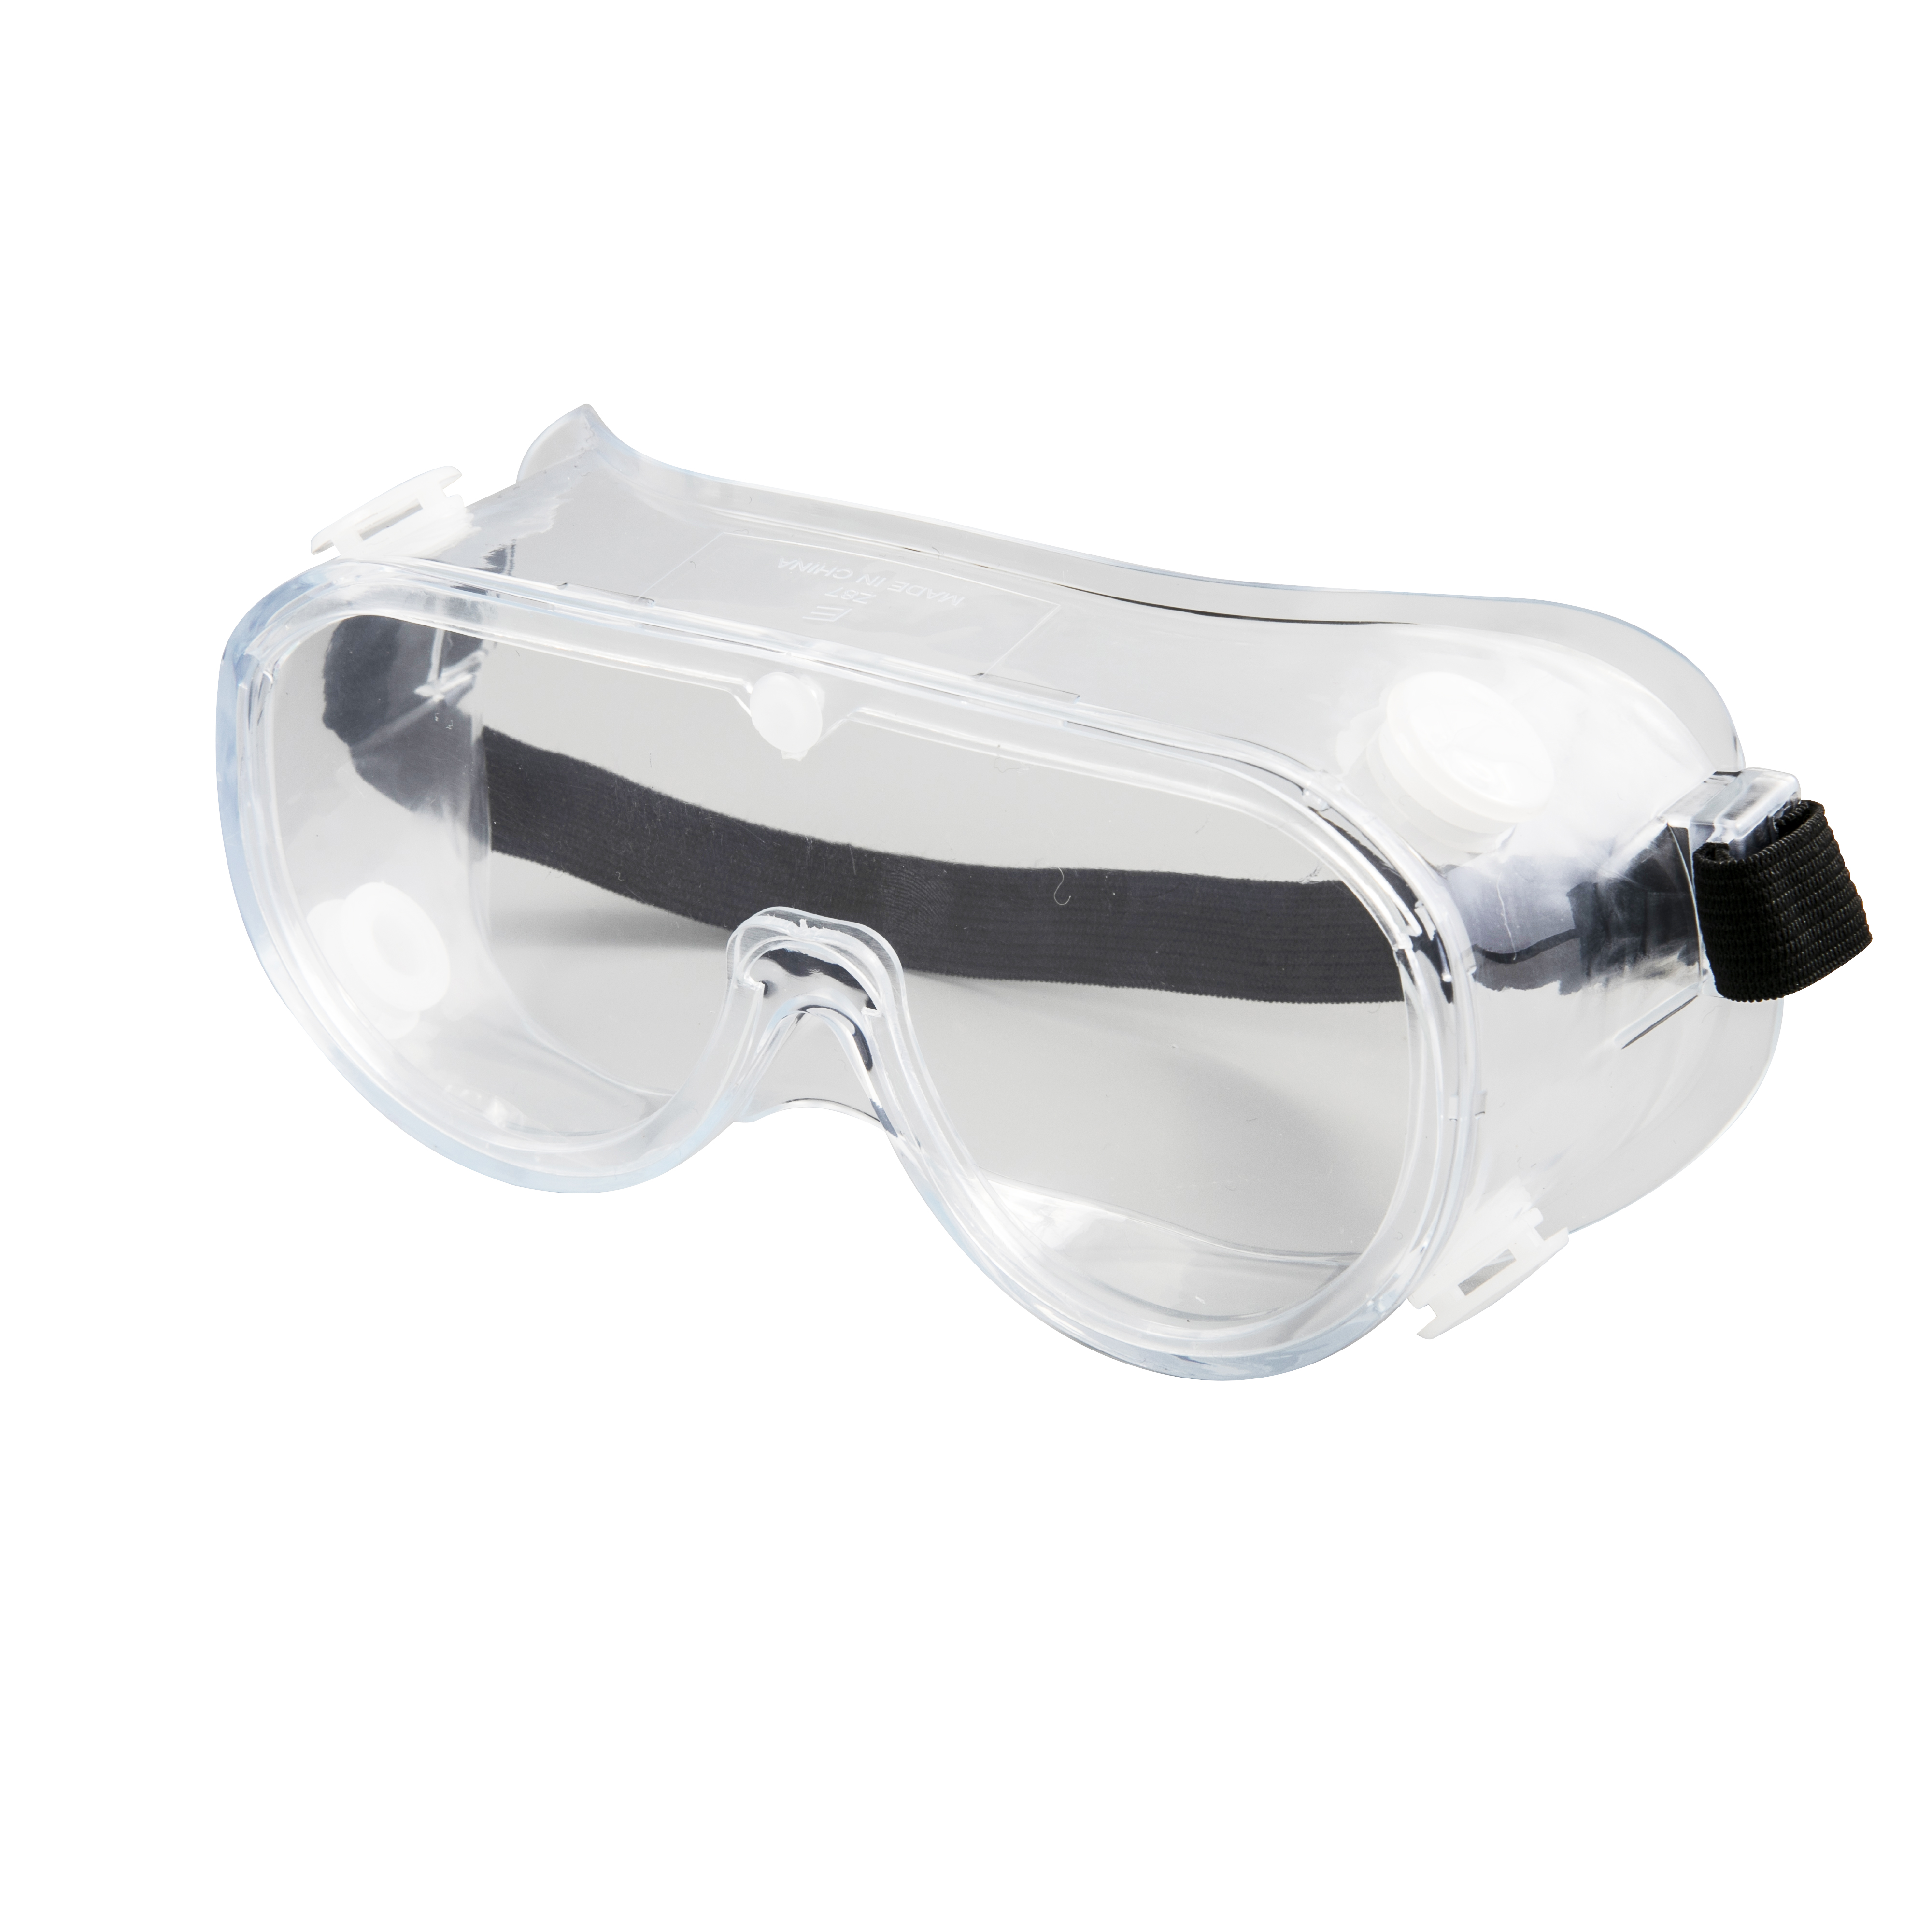 Goggles Antivirus Protective Medical